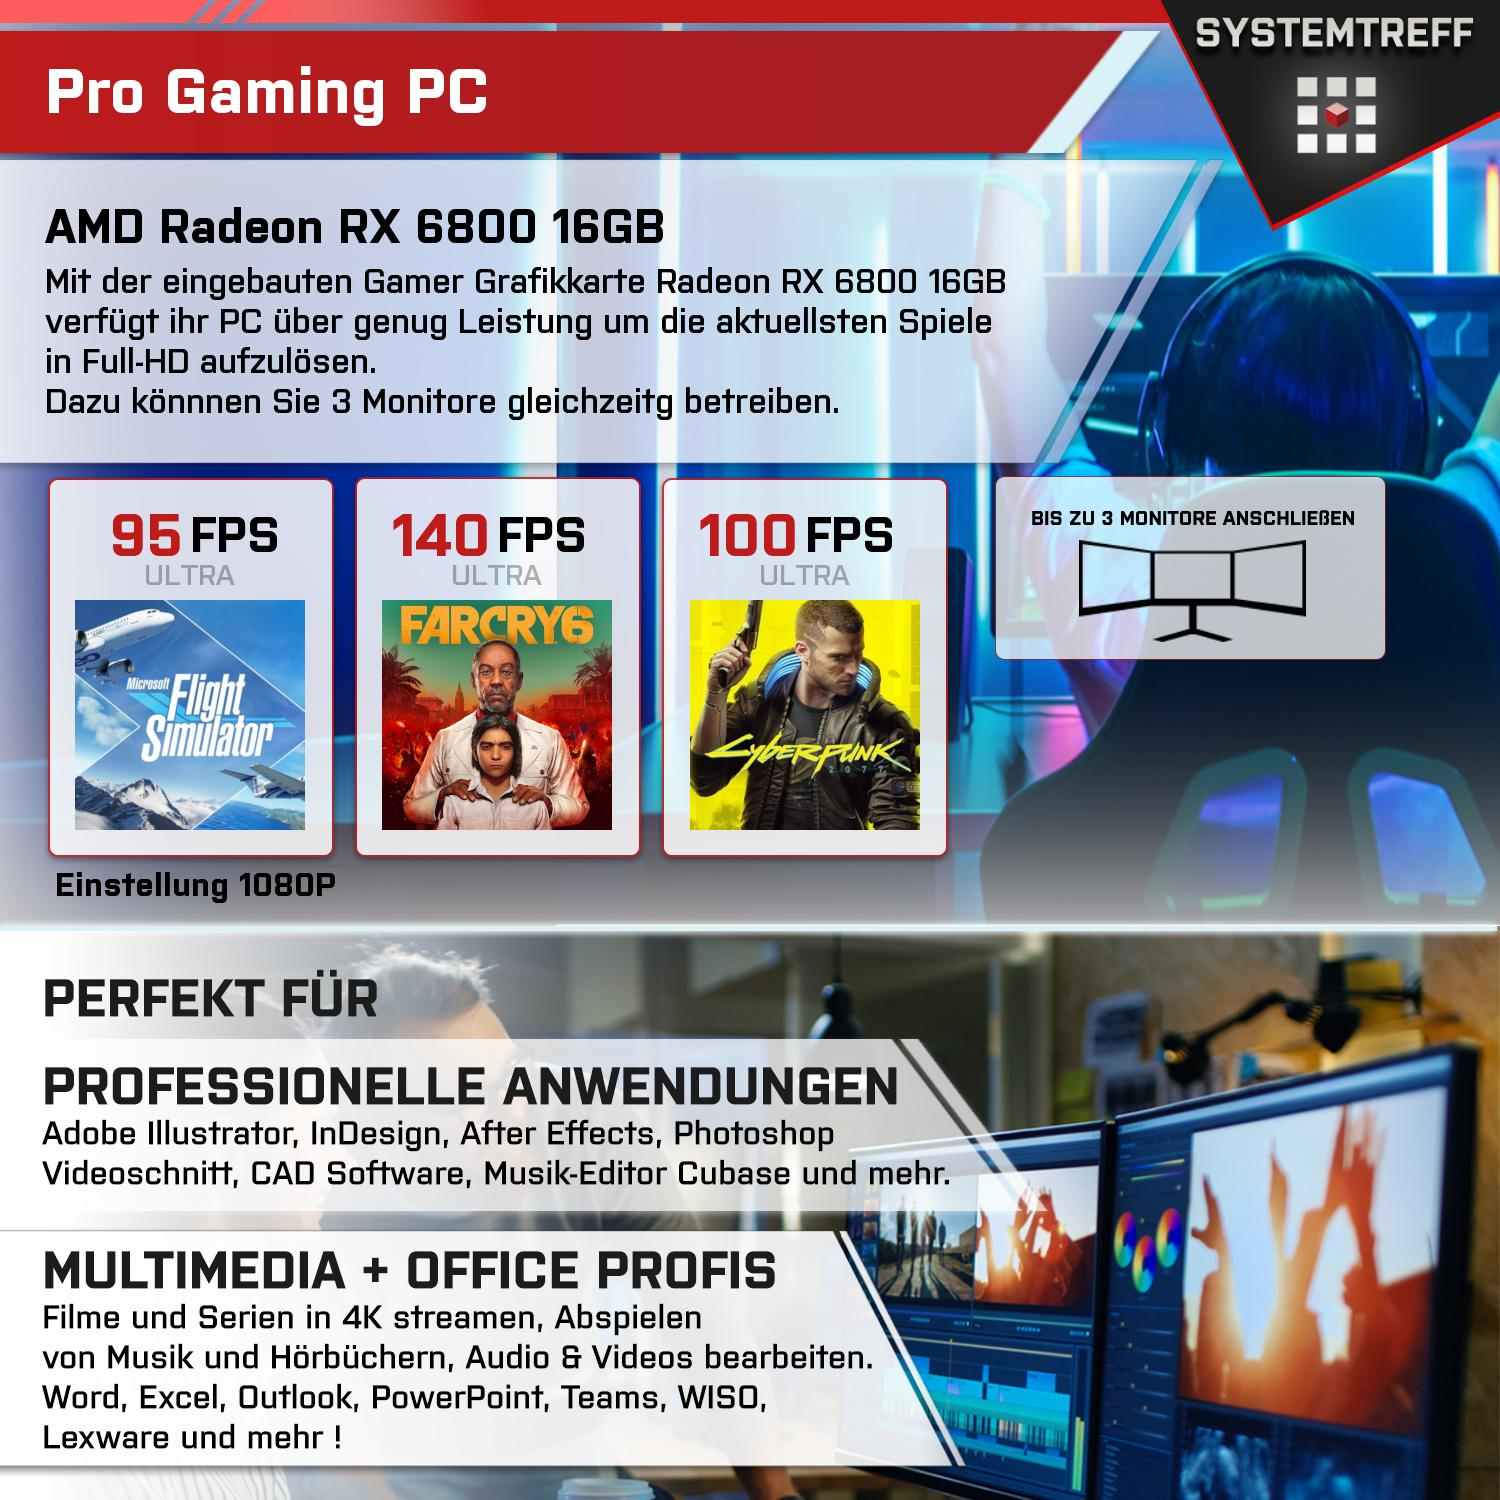 SYSTEMTREFF High-End Gaming AMD mSSD, Pro, Prozessor, RAM, GB Gaming 32 9 Radeon™ 9 Ryzen™ 1000 AMD 11 GB 6800 mit Ryzen AMD PC 7900X3D, RX Windows